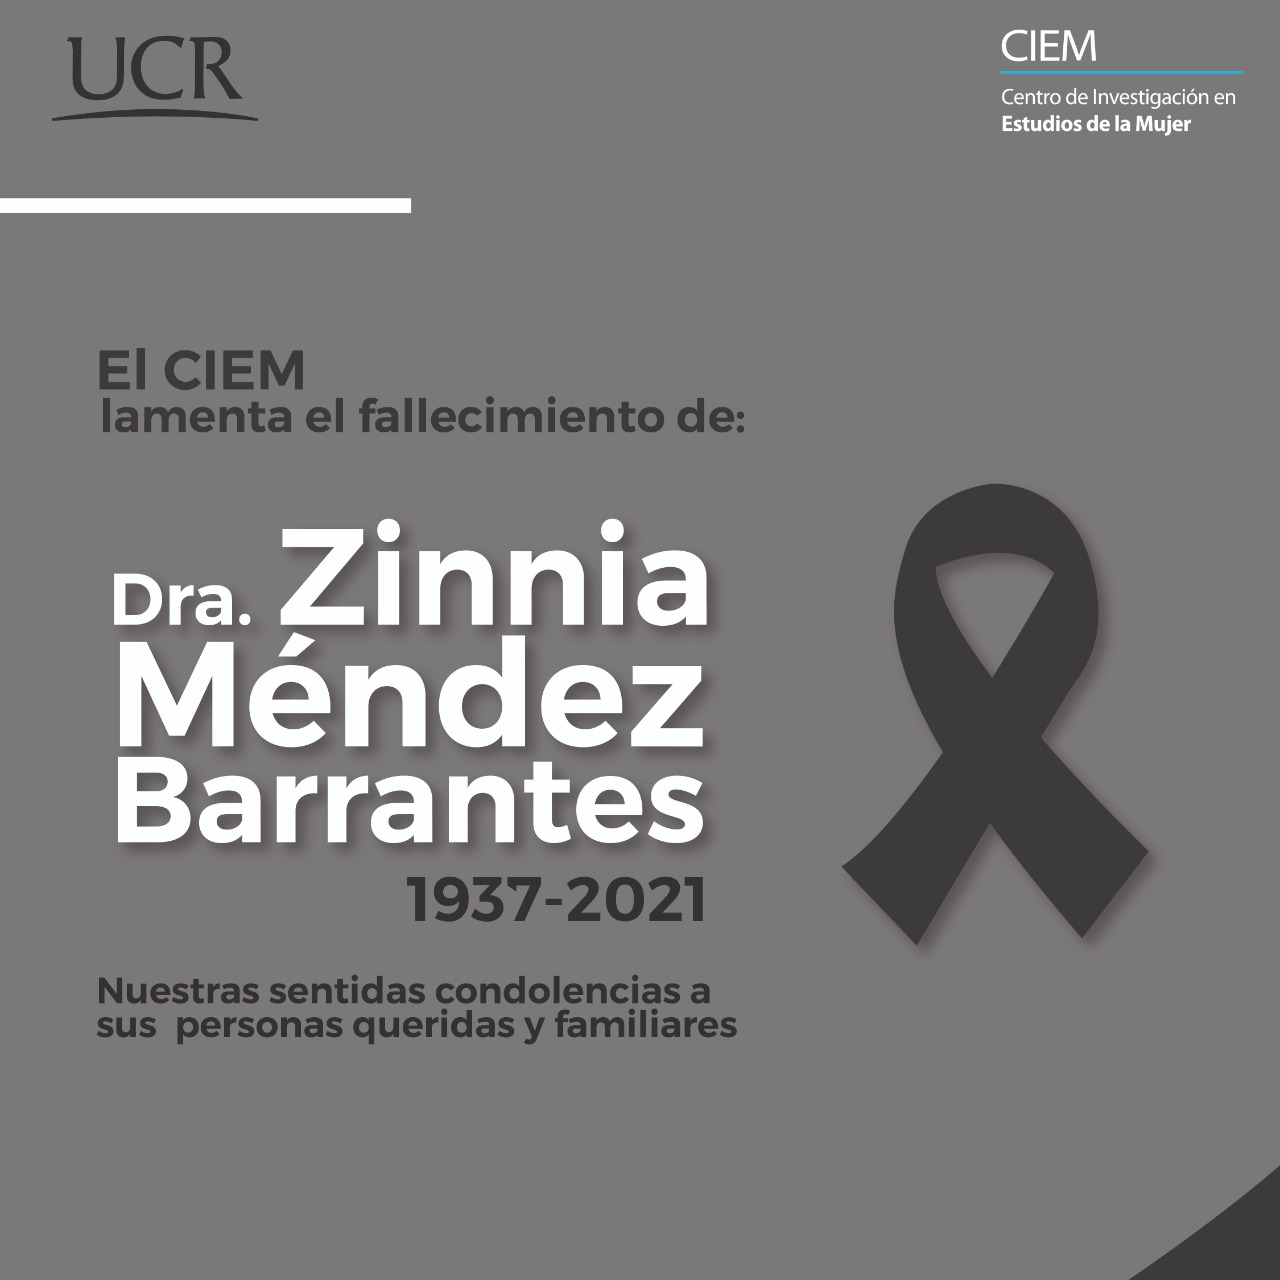 Nota luctuosa por la muerte de la Dra. Zinnia Méndez